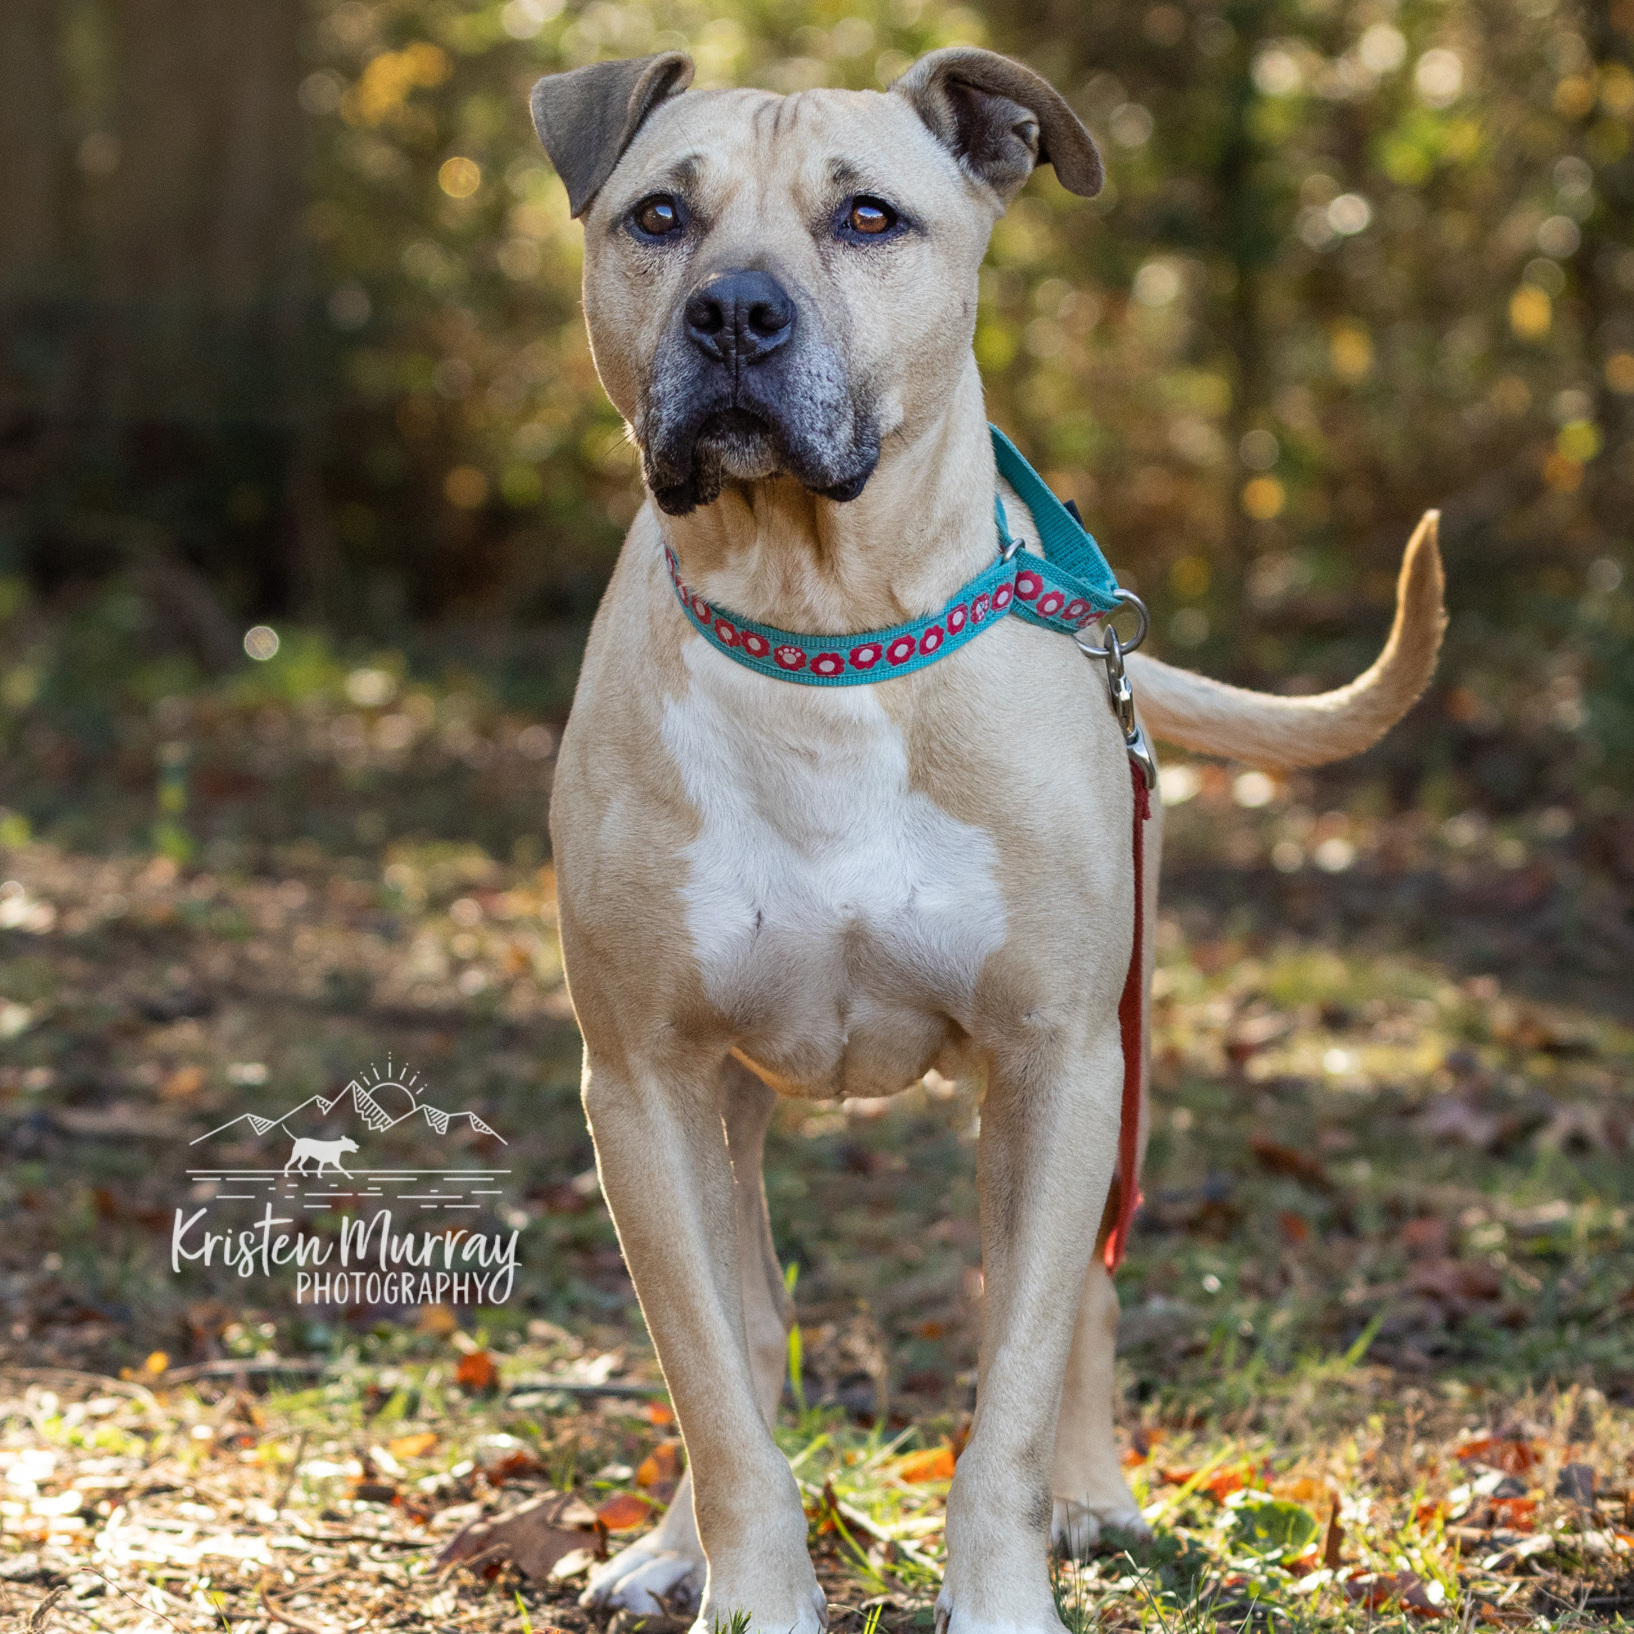 Boy George - star potential, an adoptable Labrador Retriever in Midlothian, VA, 23112 | Photo Image 5